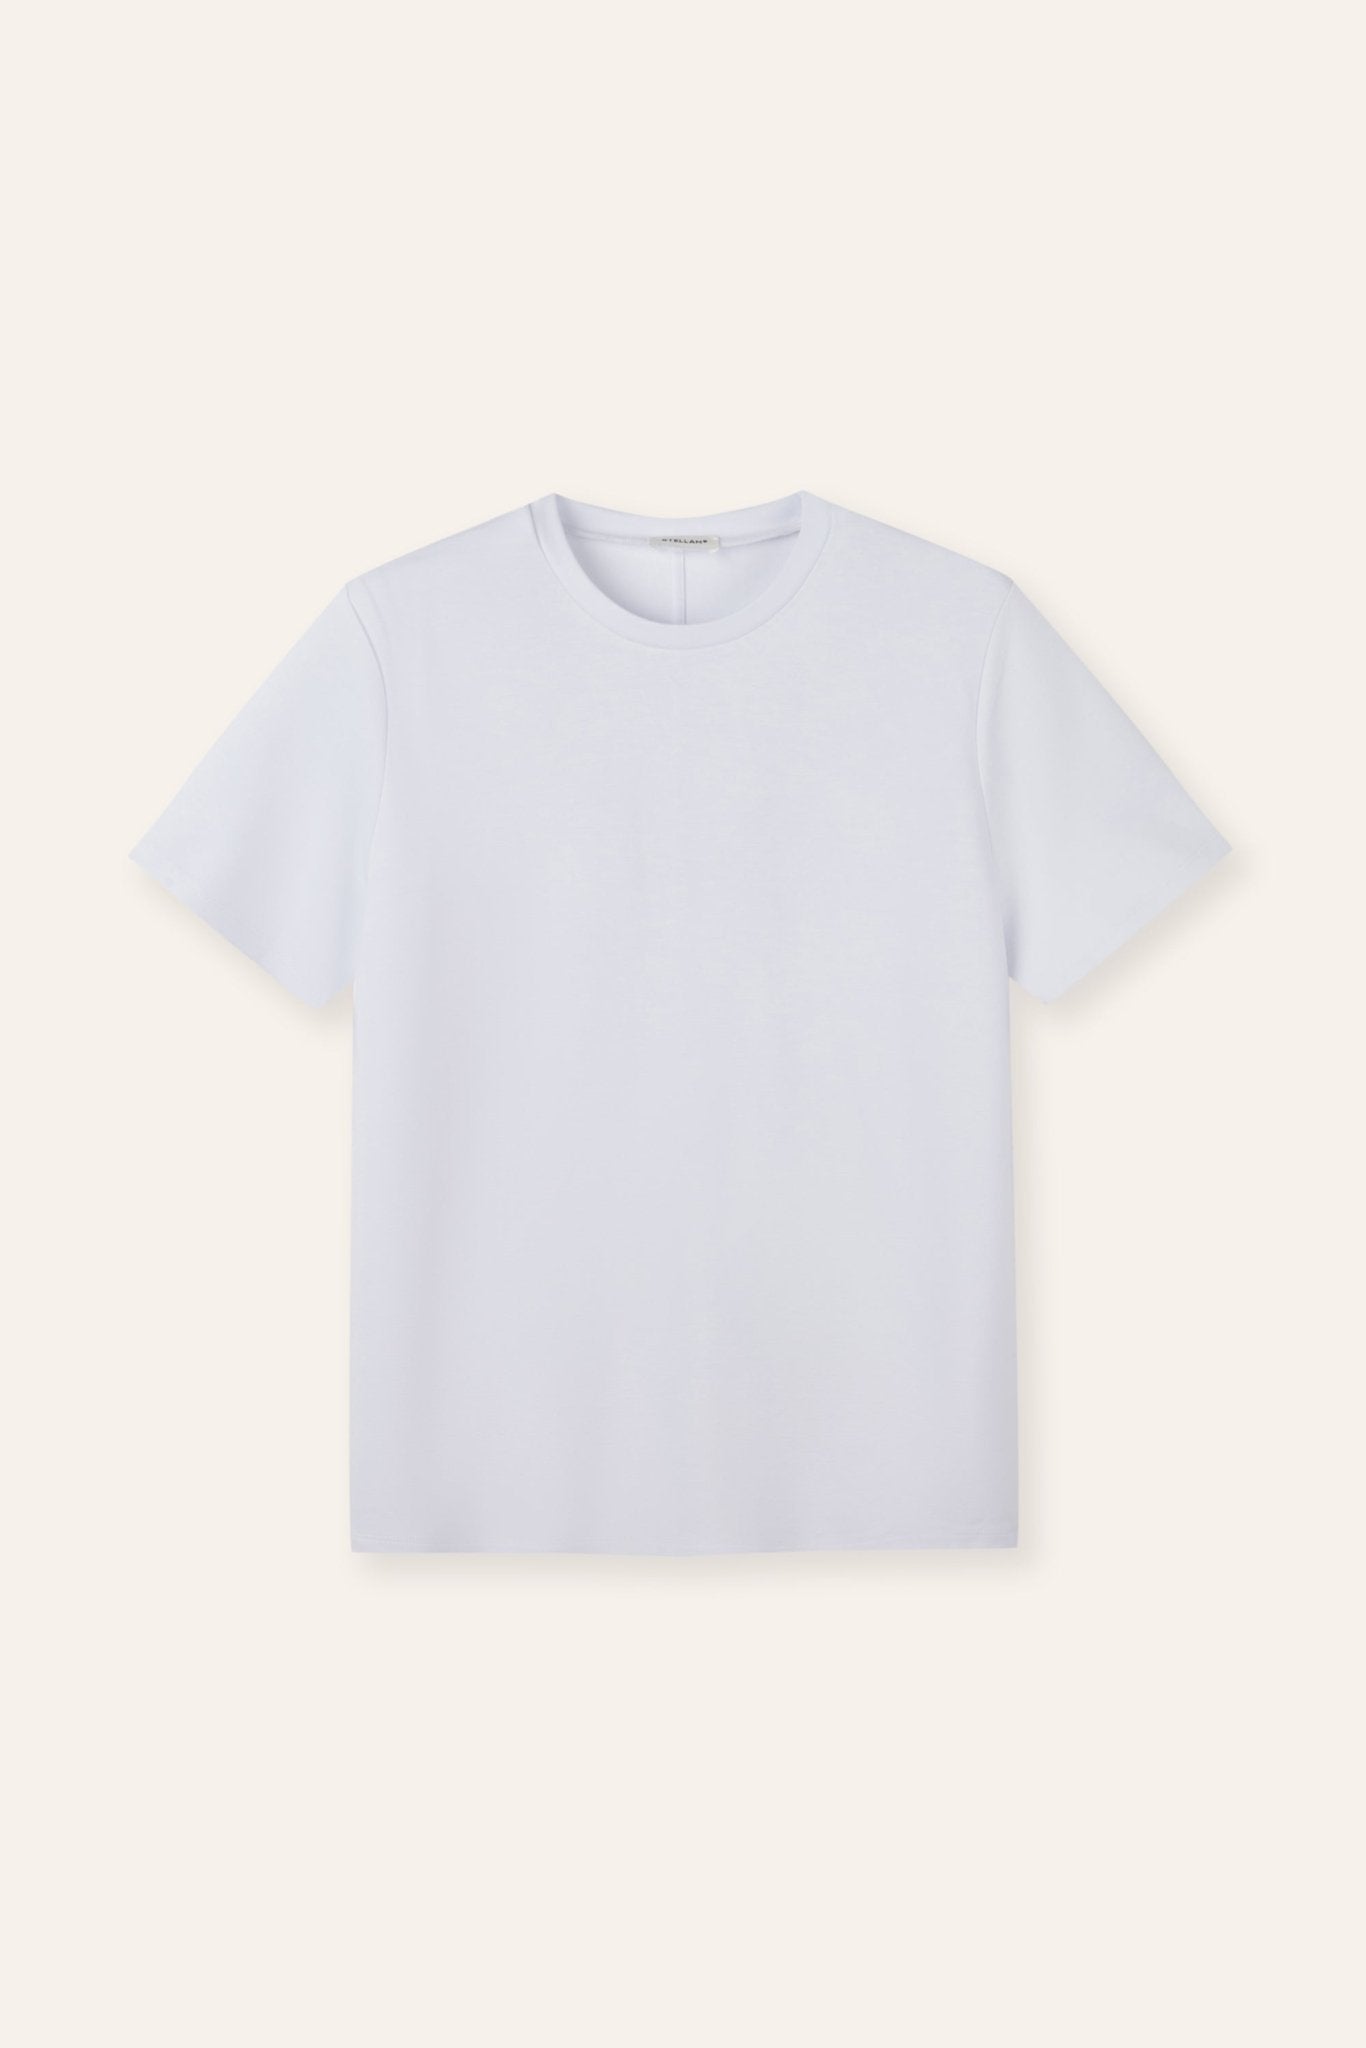 WESLER jersey top (White) - STELLAM